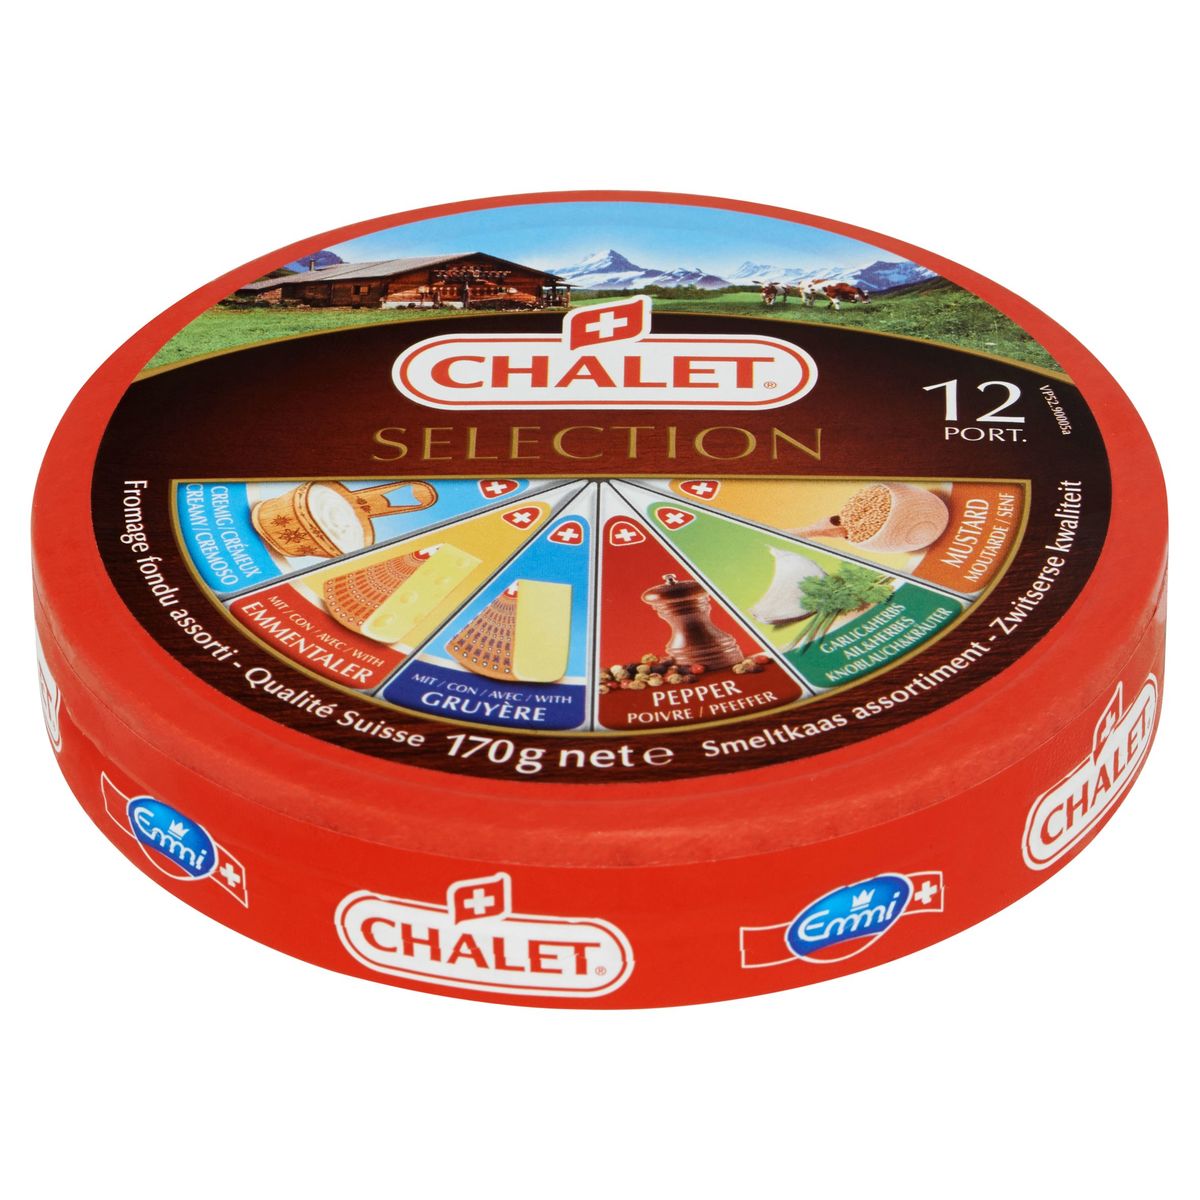 Chalet Selection Smeltkaas Assortiment 12 Port. 170 g